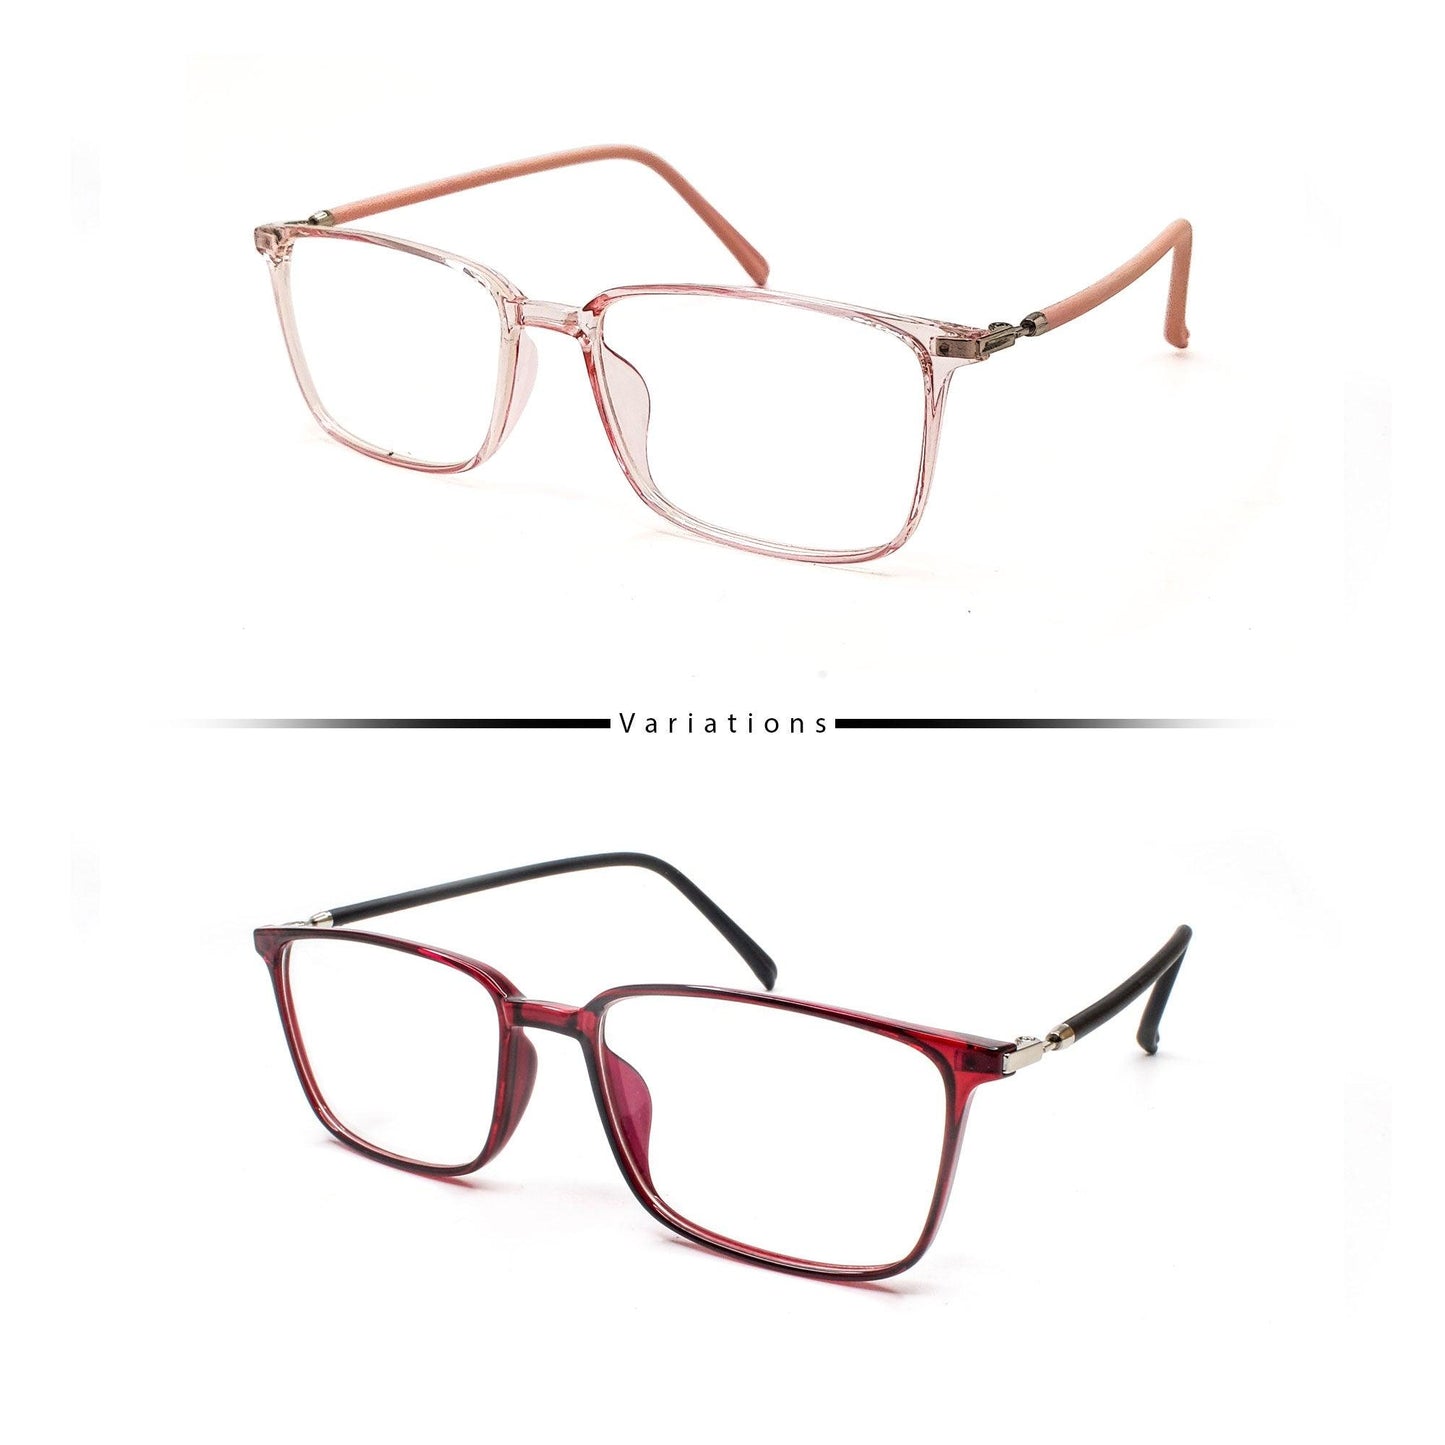 Peculiar HAYDEN Square FLEX TR90 Frame Anti Radiation Glasses UV400 - peculiareyewear